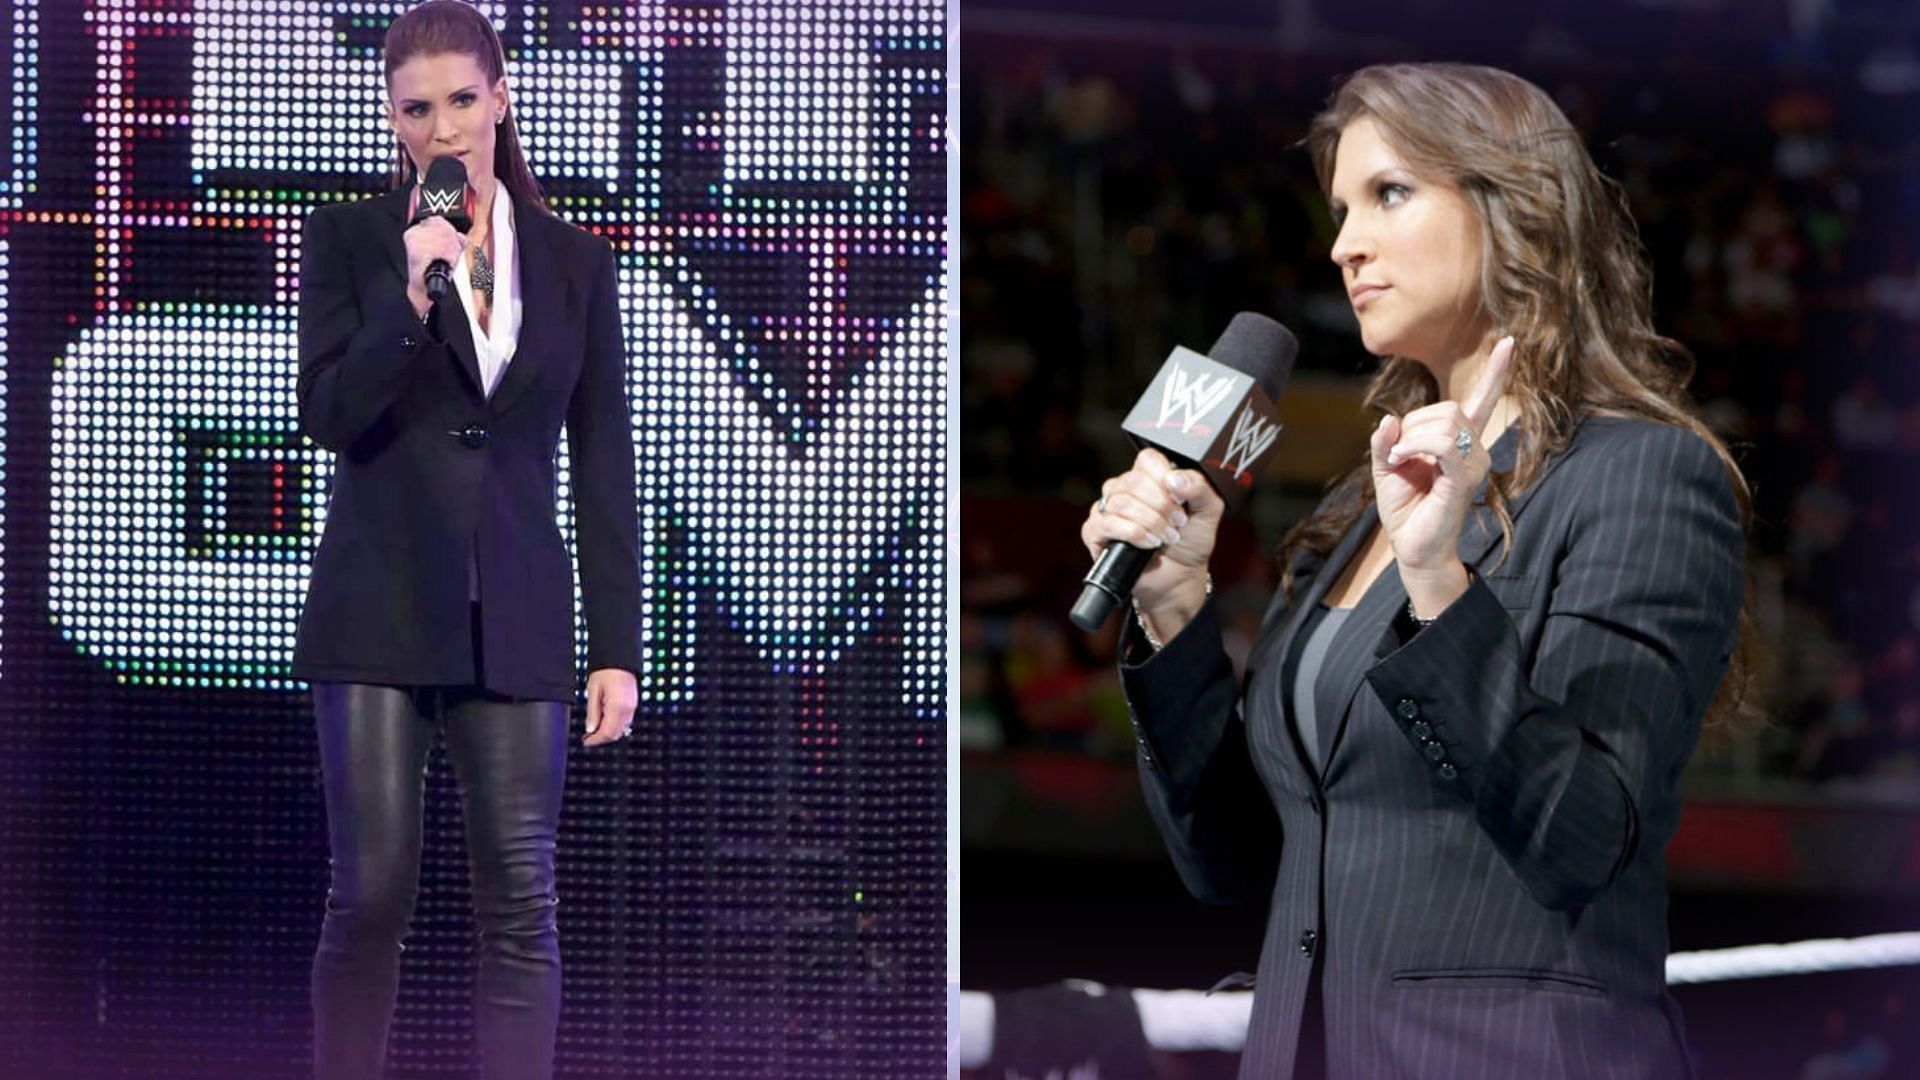 Stephanie McMahon serves as WWE